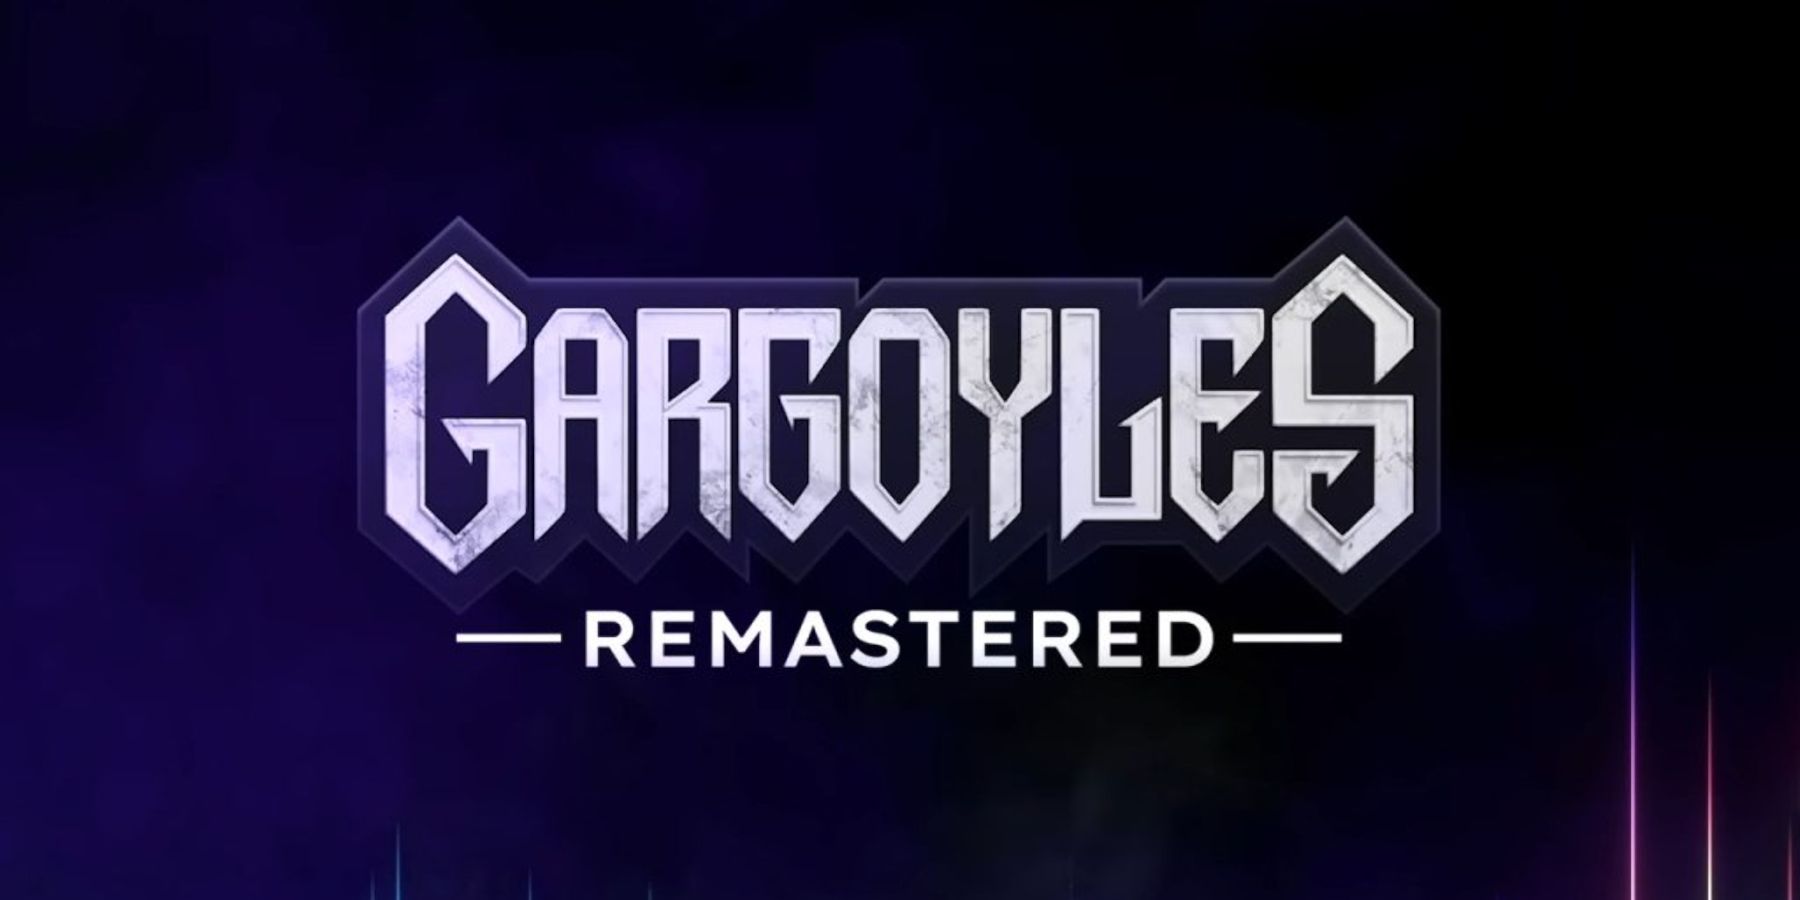 gargoyles remastered logo reveal